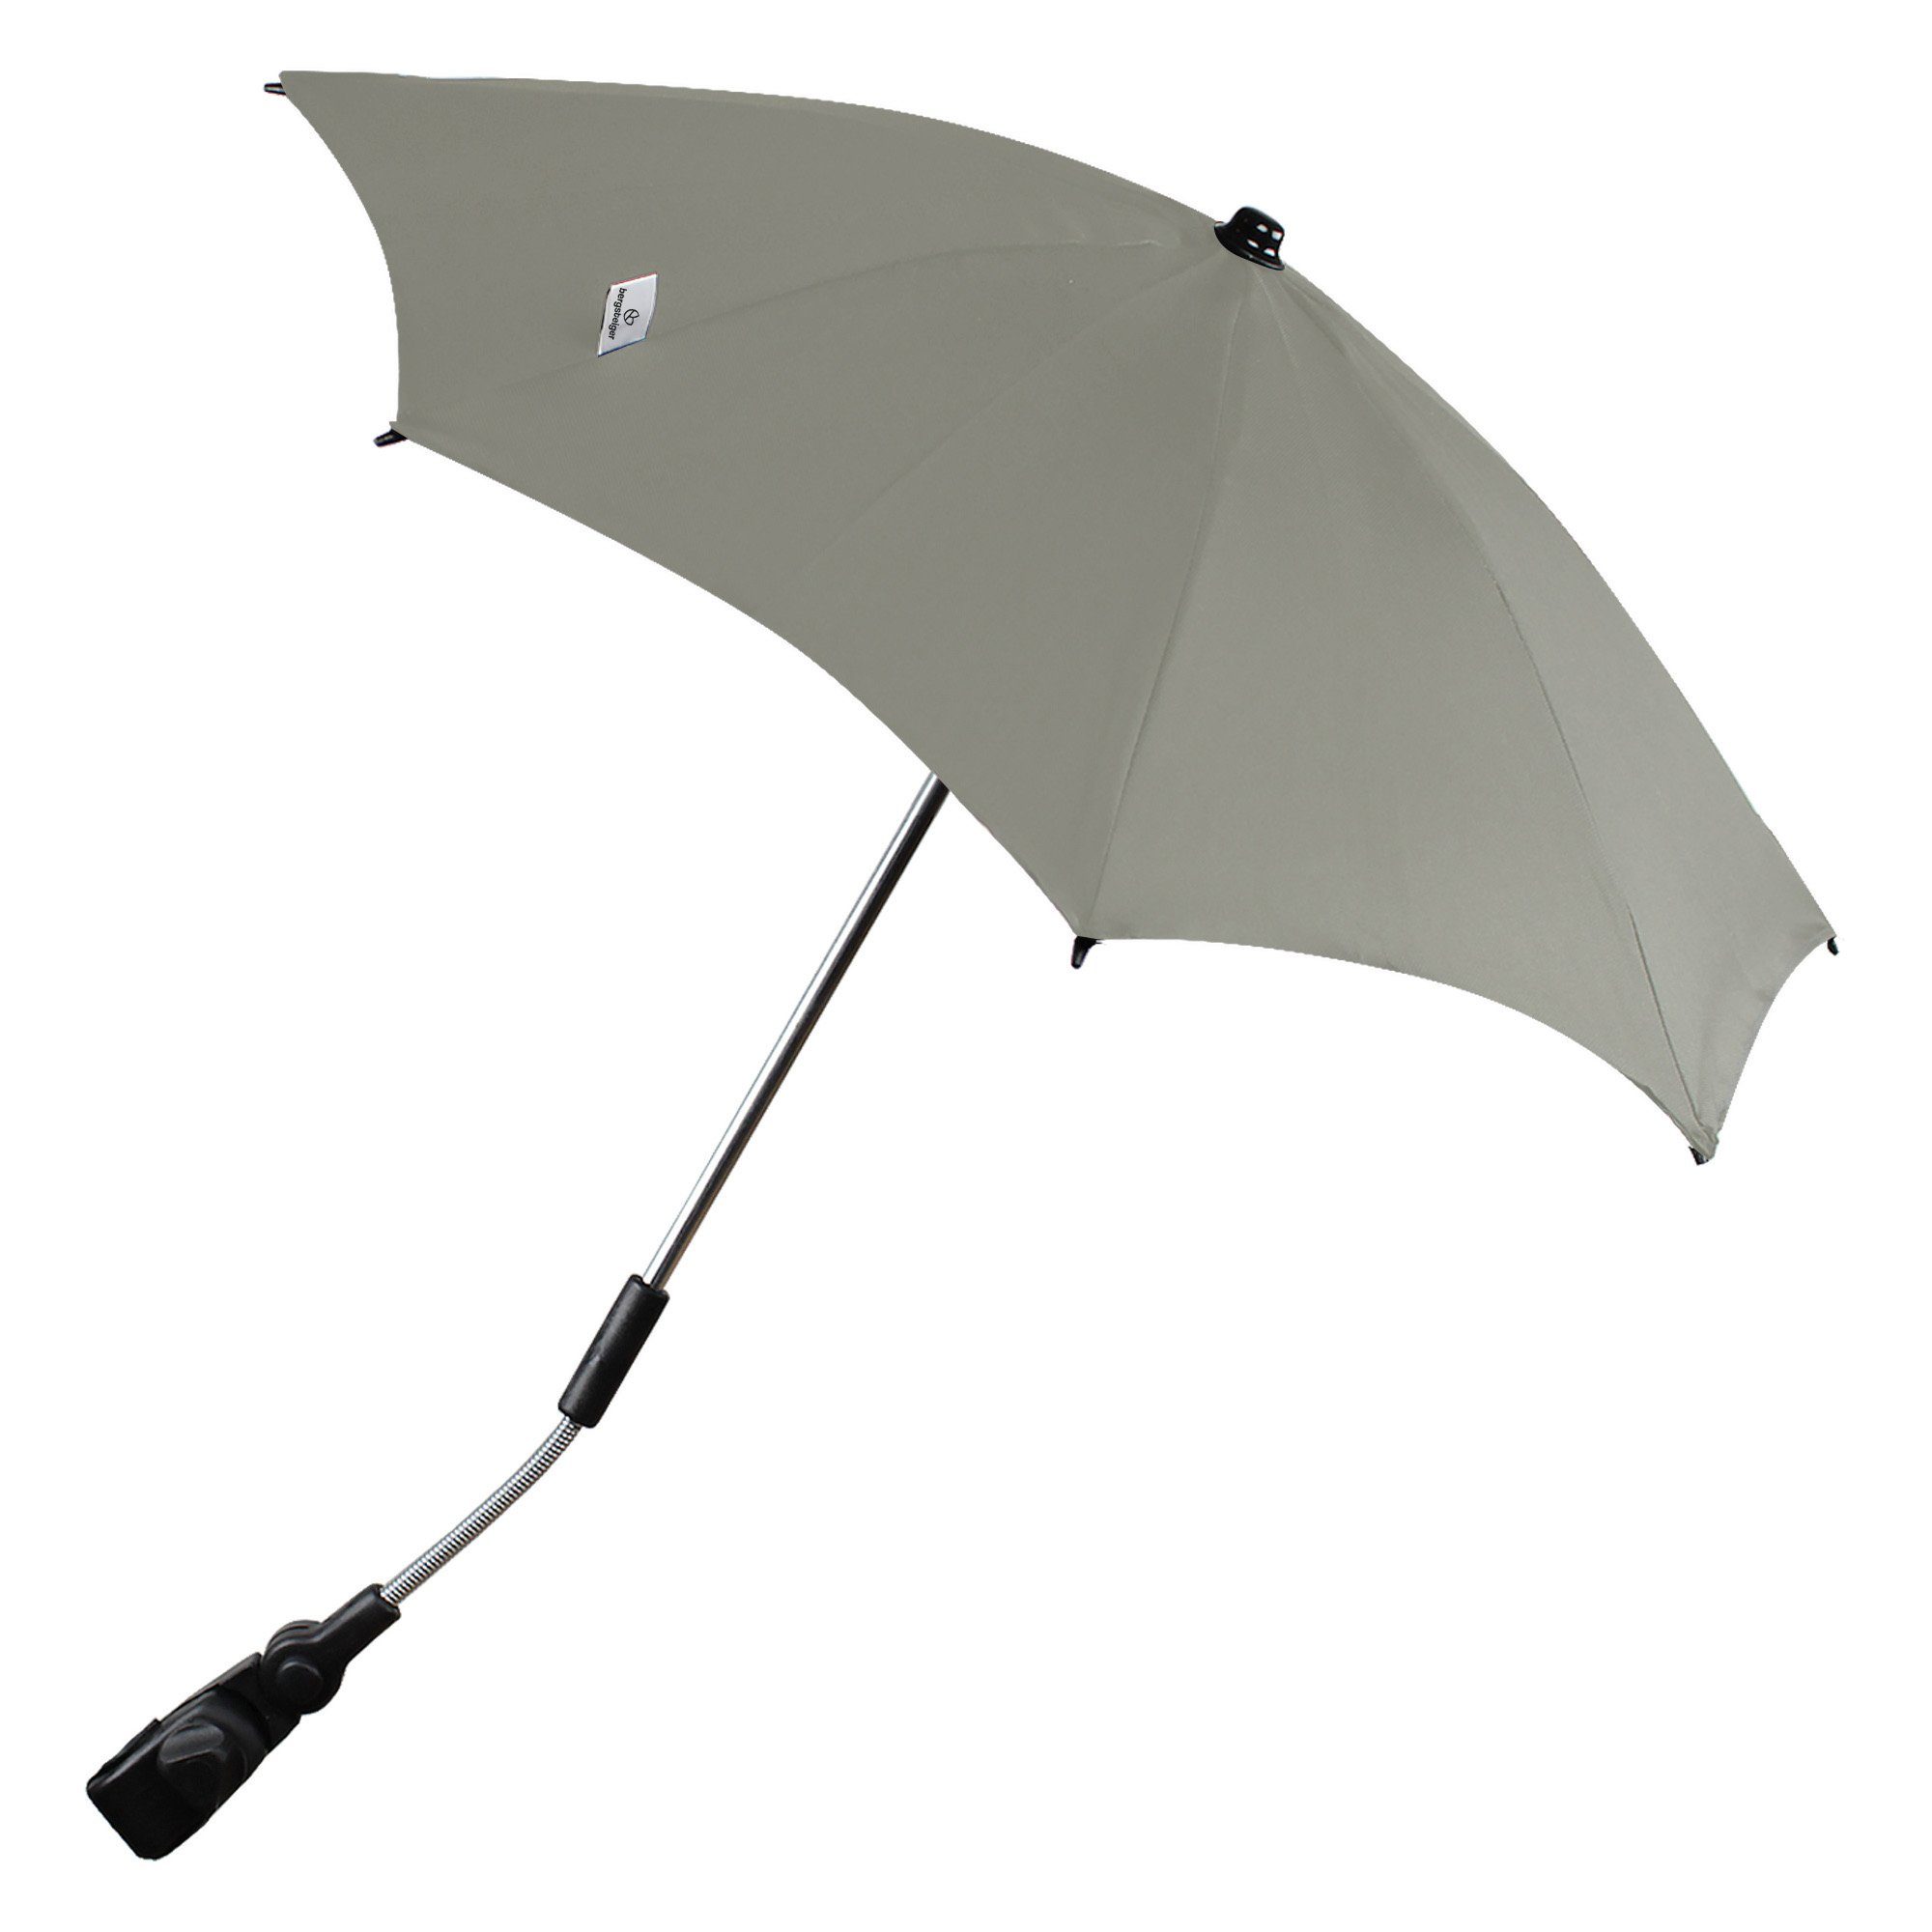 Schirm, beige Sonnenschirm bergsteiger & 50+ Kinderwagenschirm für Kinderwagen UV Buggy, Sonnenschutz